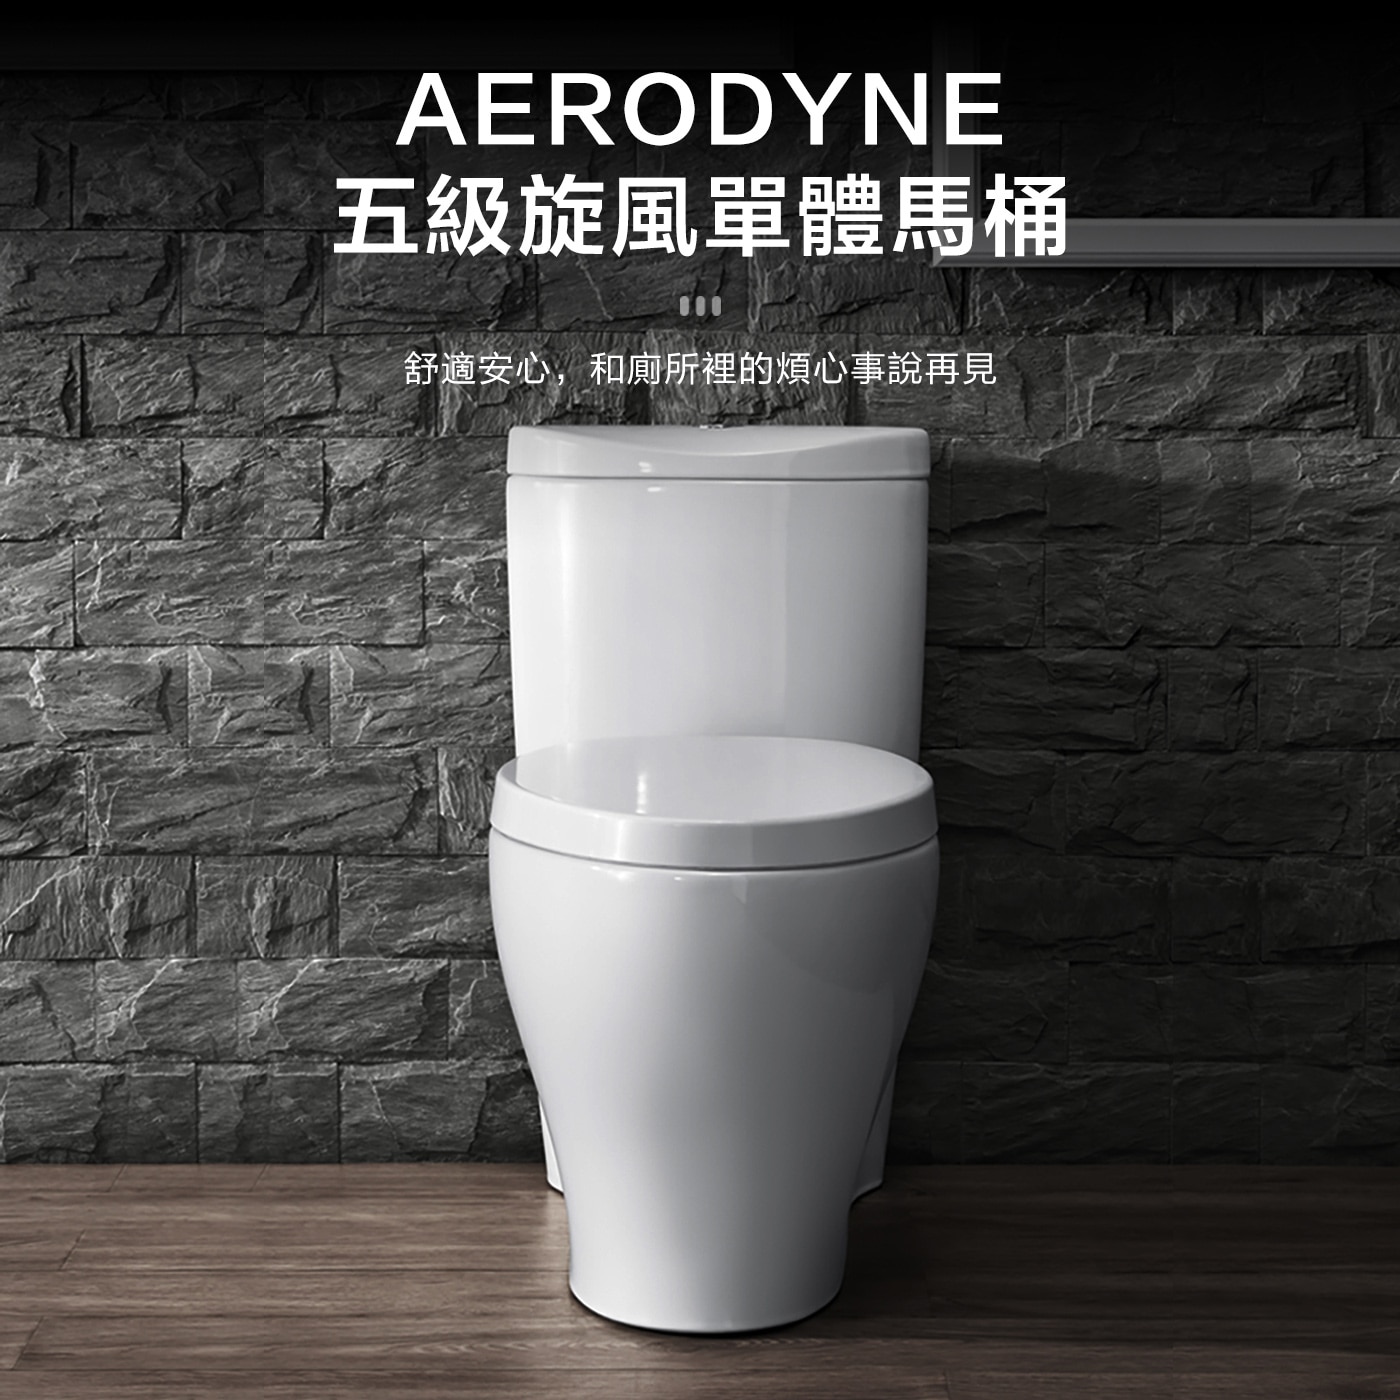 Kohler 虹吸式單體馬桶AERODYNE五級旋風舒適安心和廁所裡的煩心事說再見